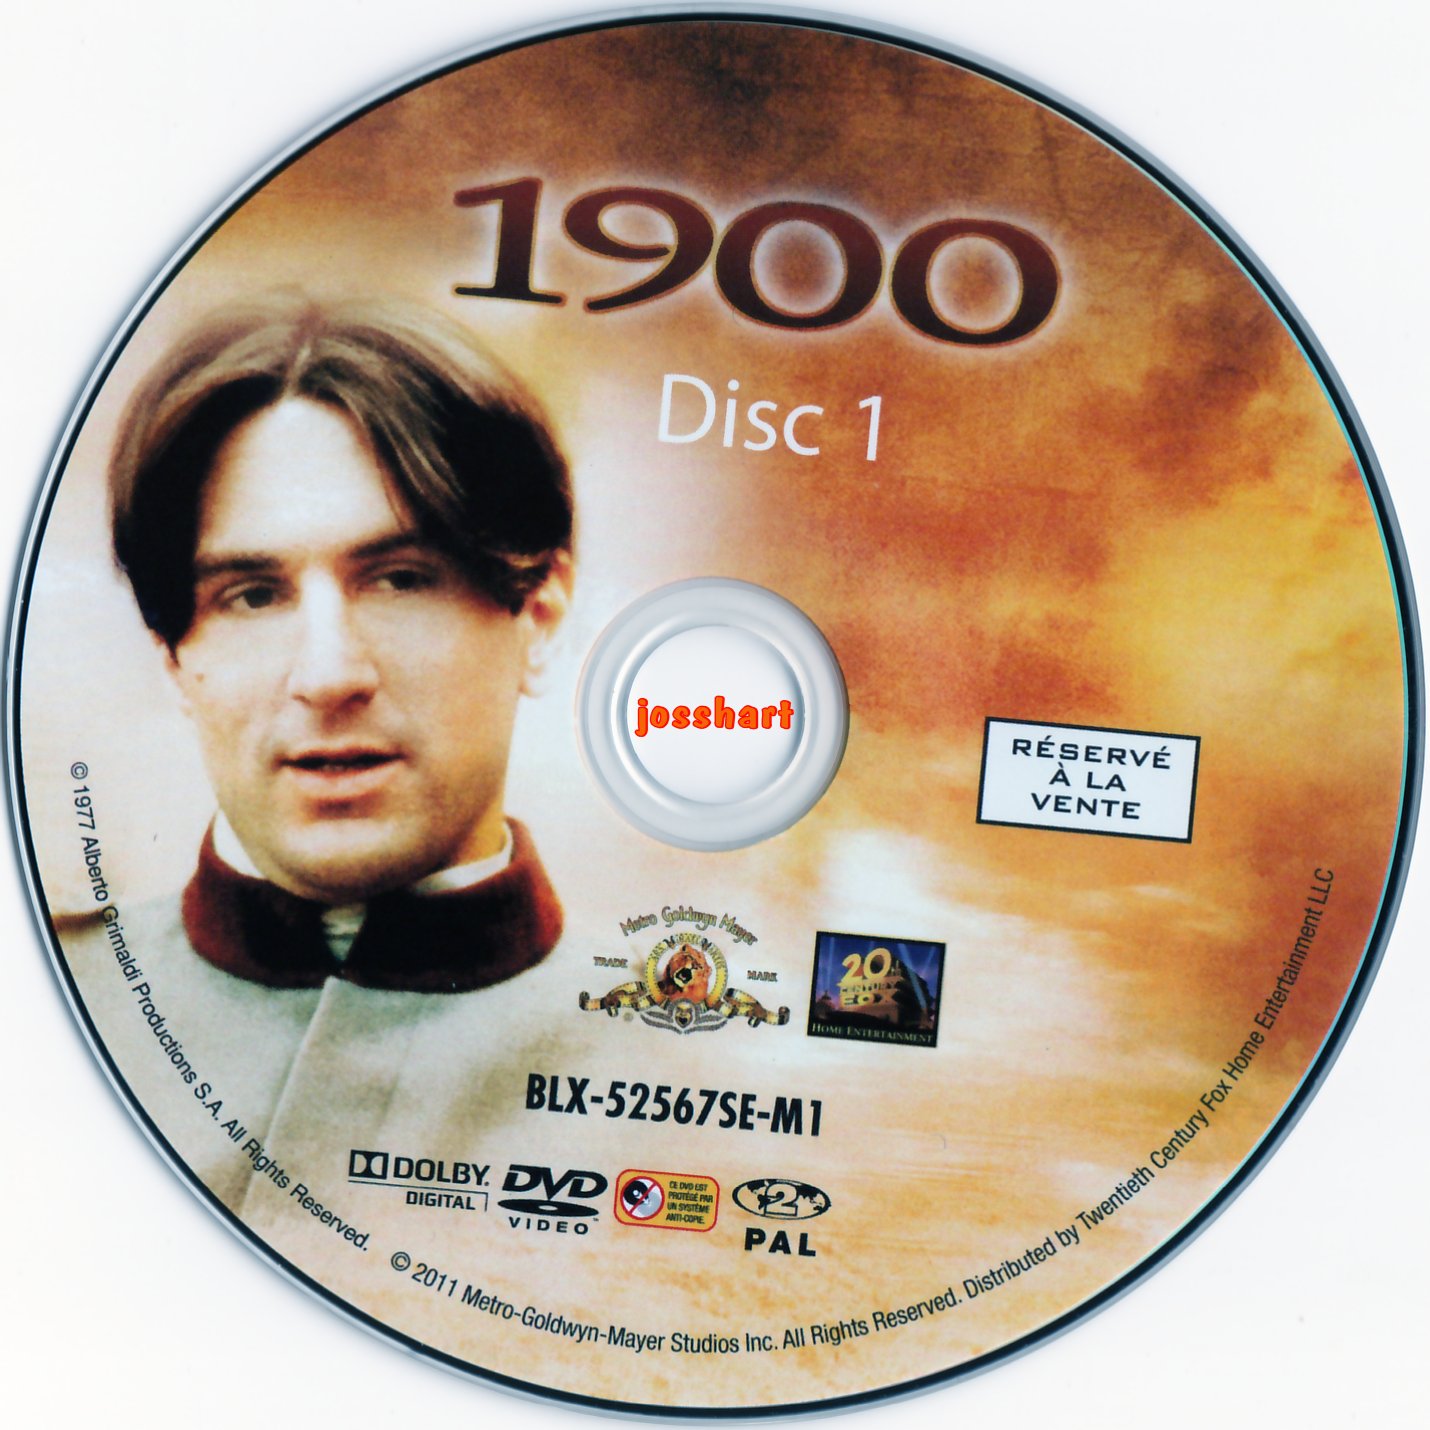 1900 DISC 1